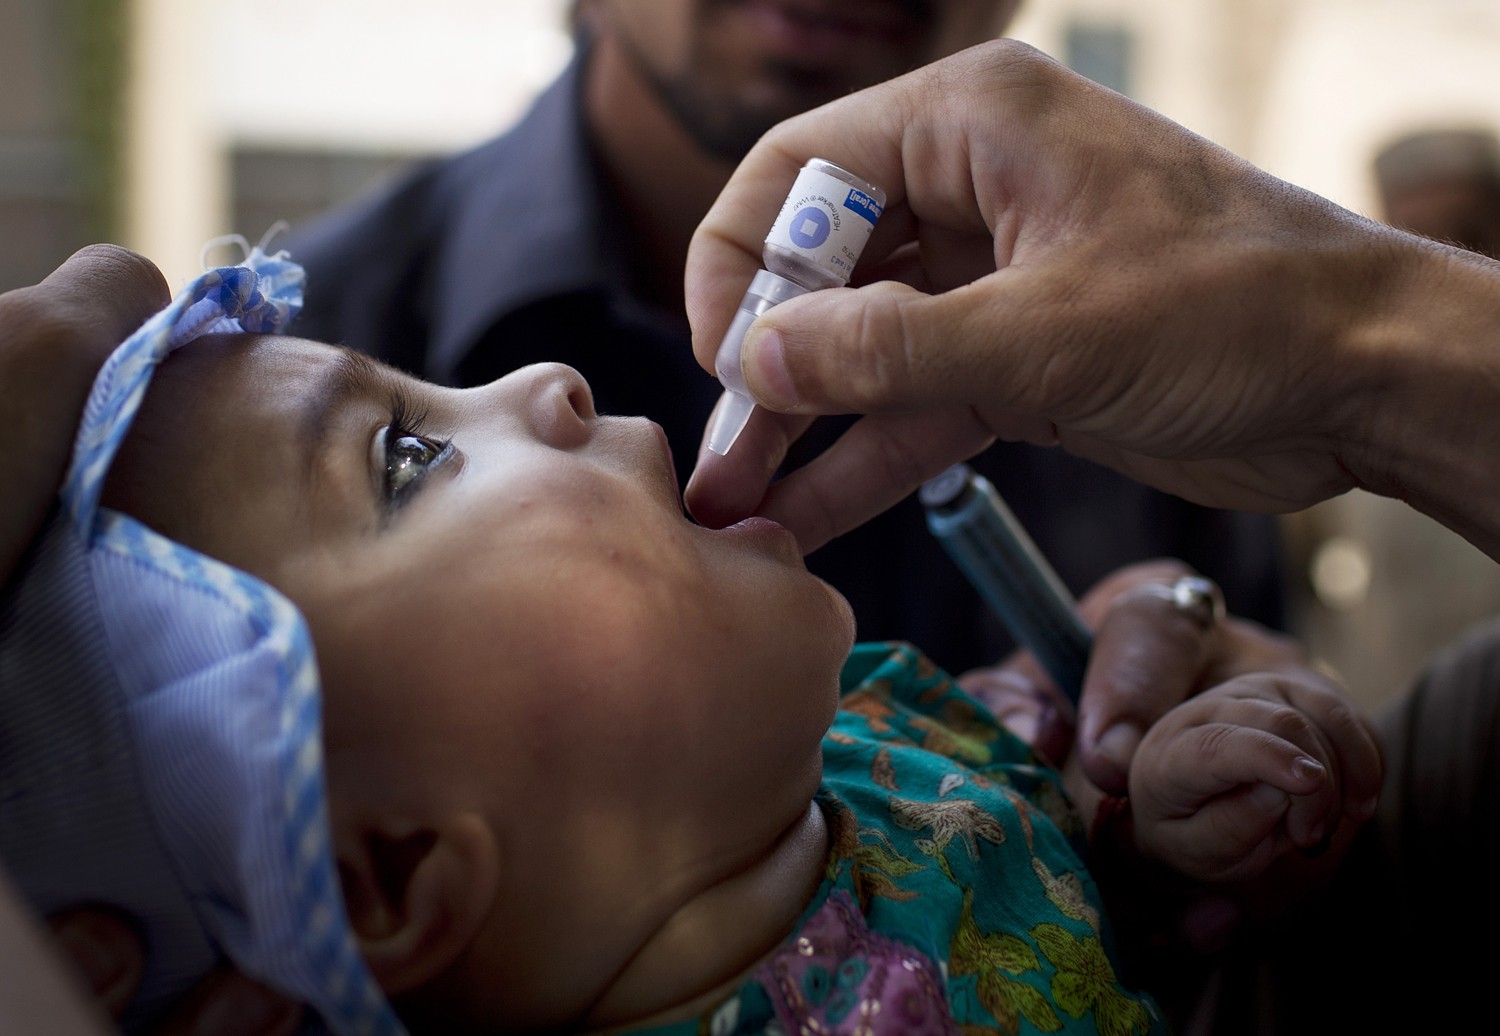 The problem of polio